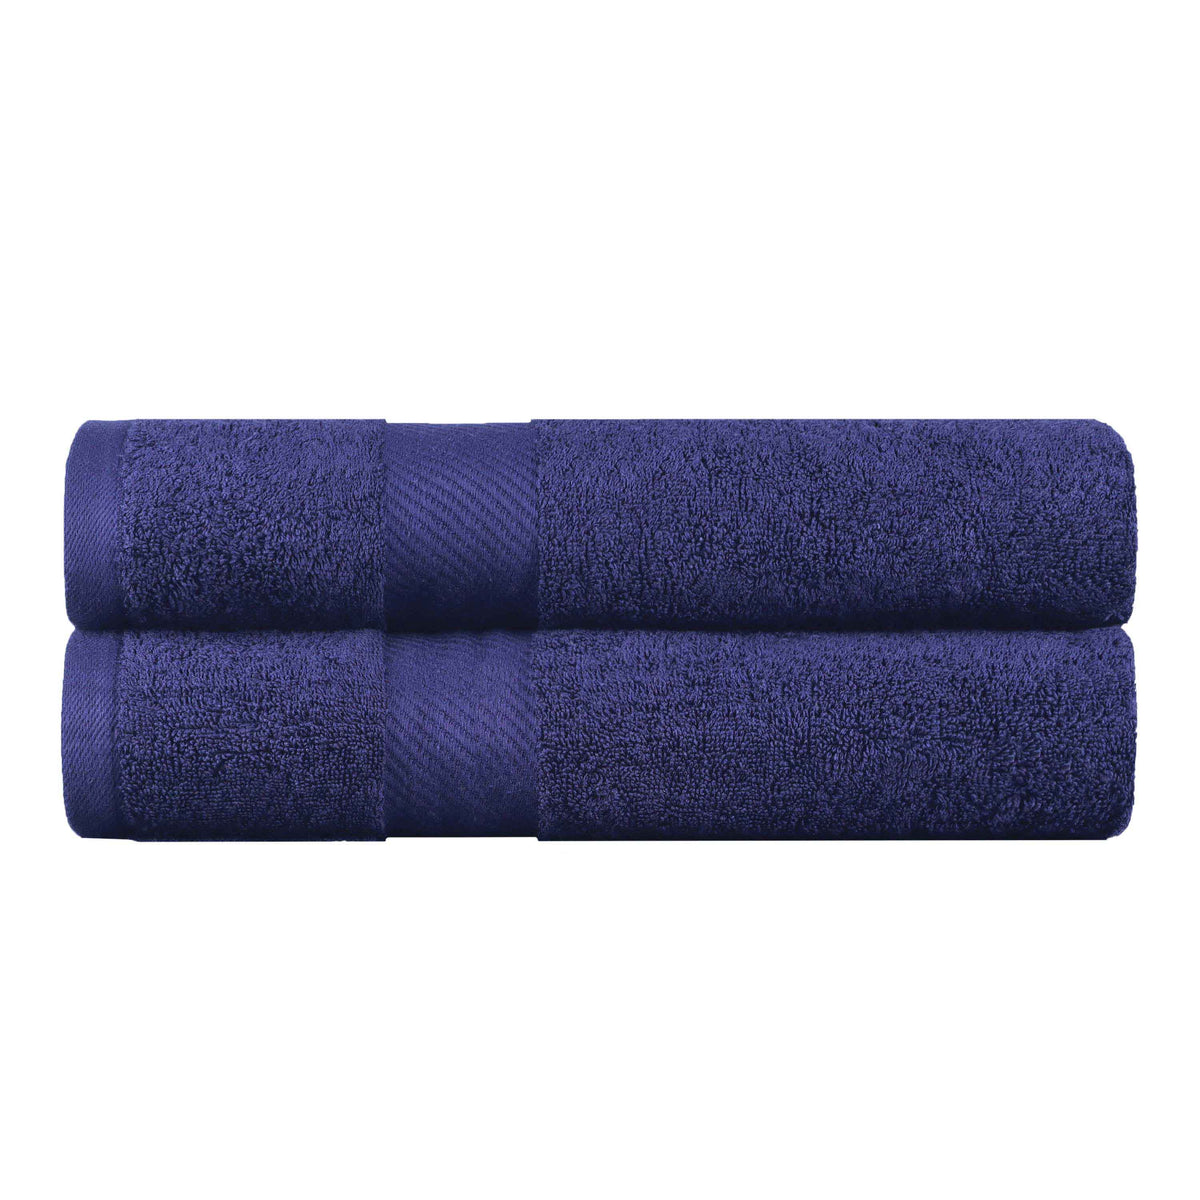 Kendell Egyptian Cotton Solid Medium Weight Bath Towel Set of 2 - NavyBlue